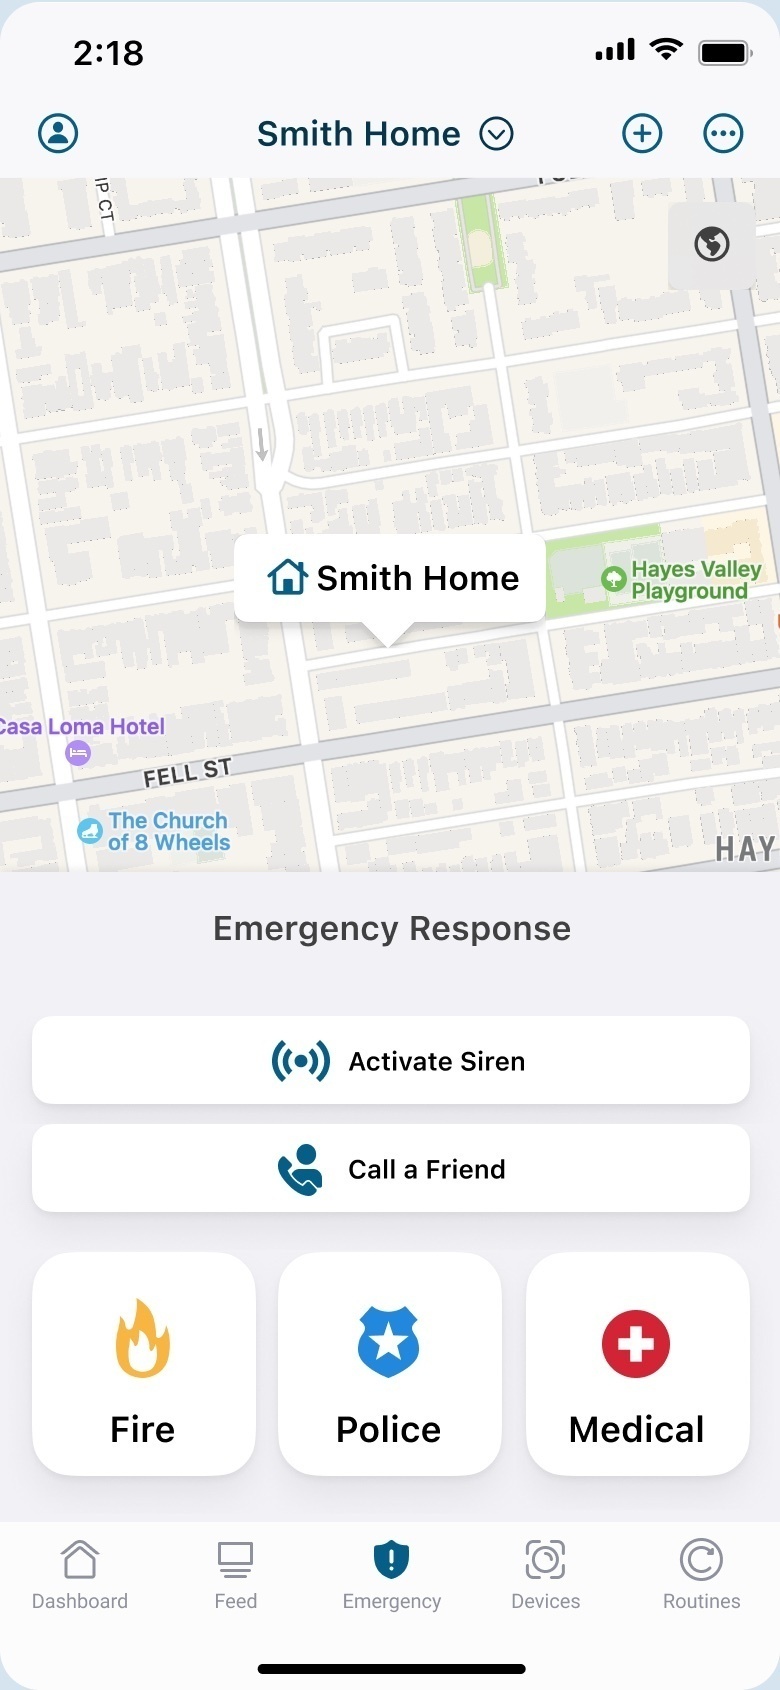 Access 24/7 Emergency Response¹